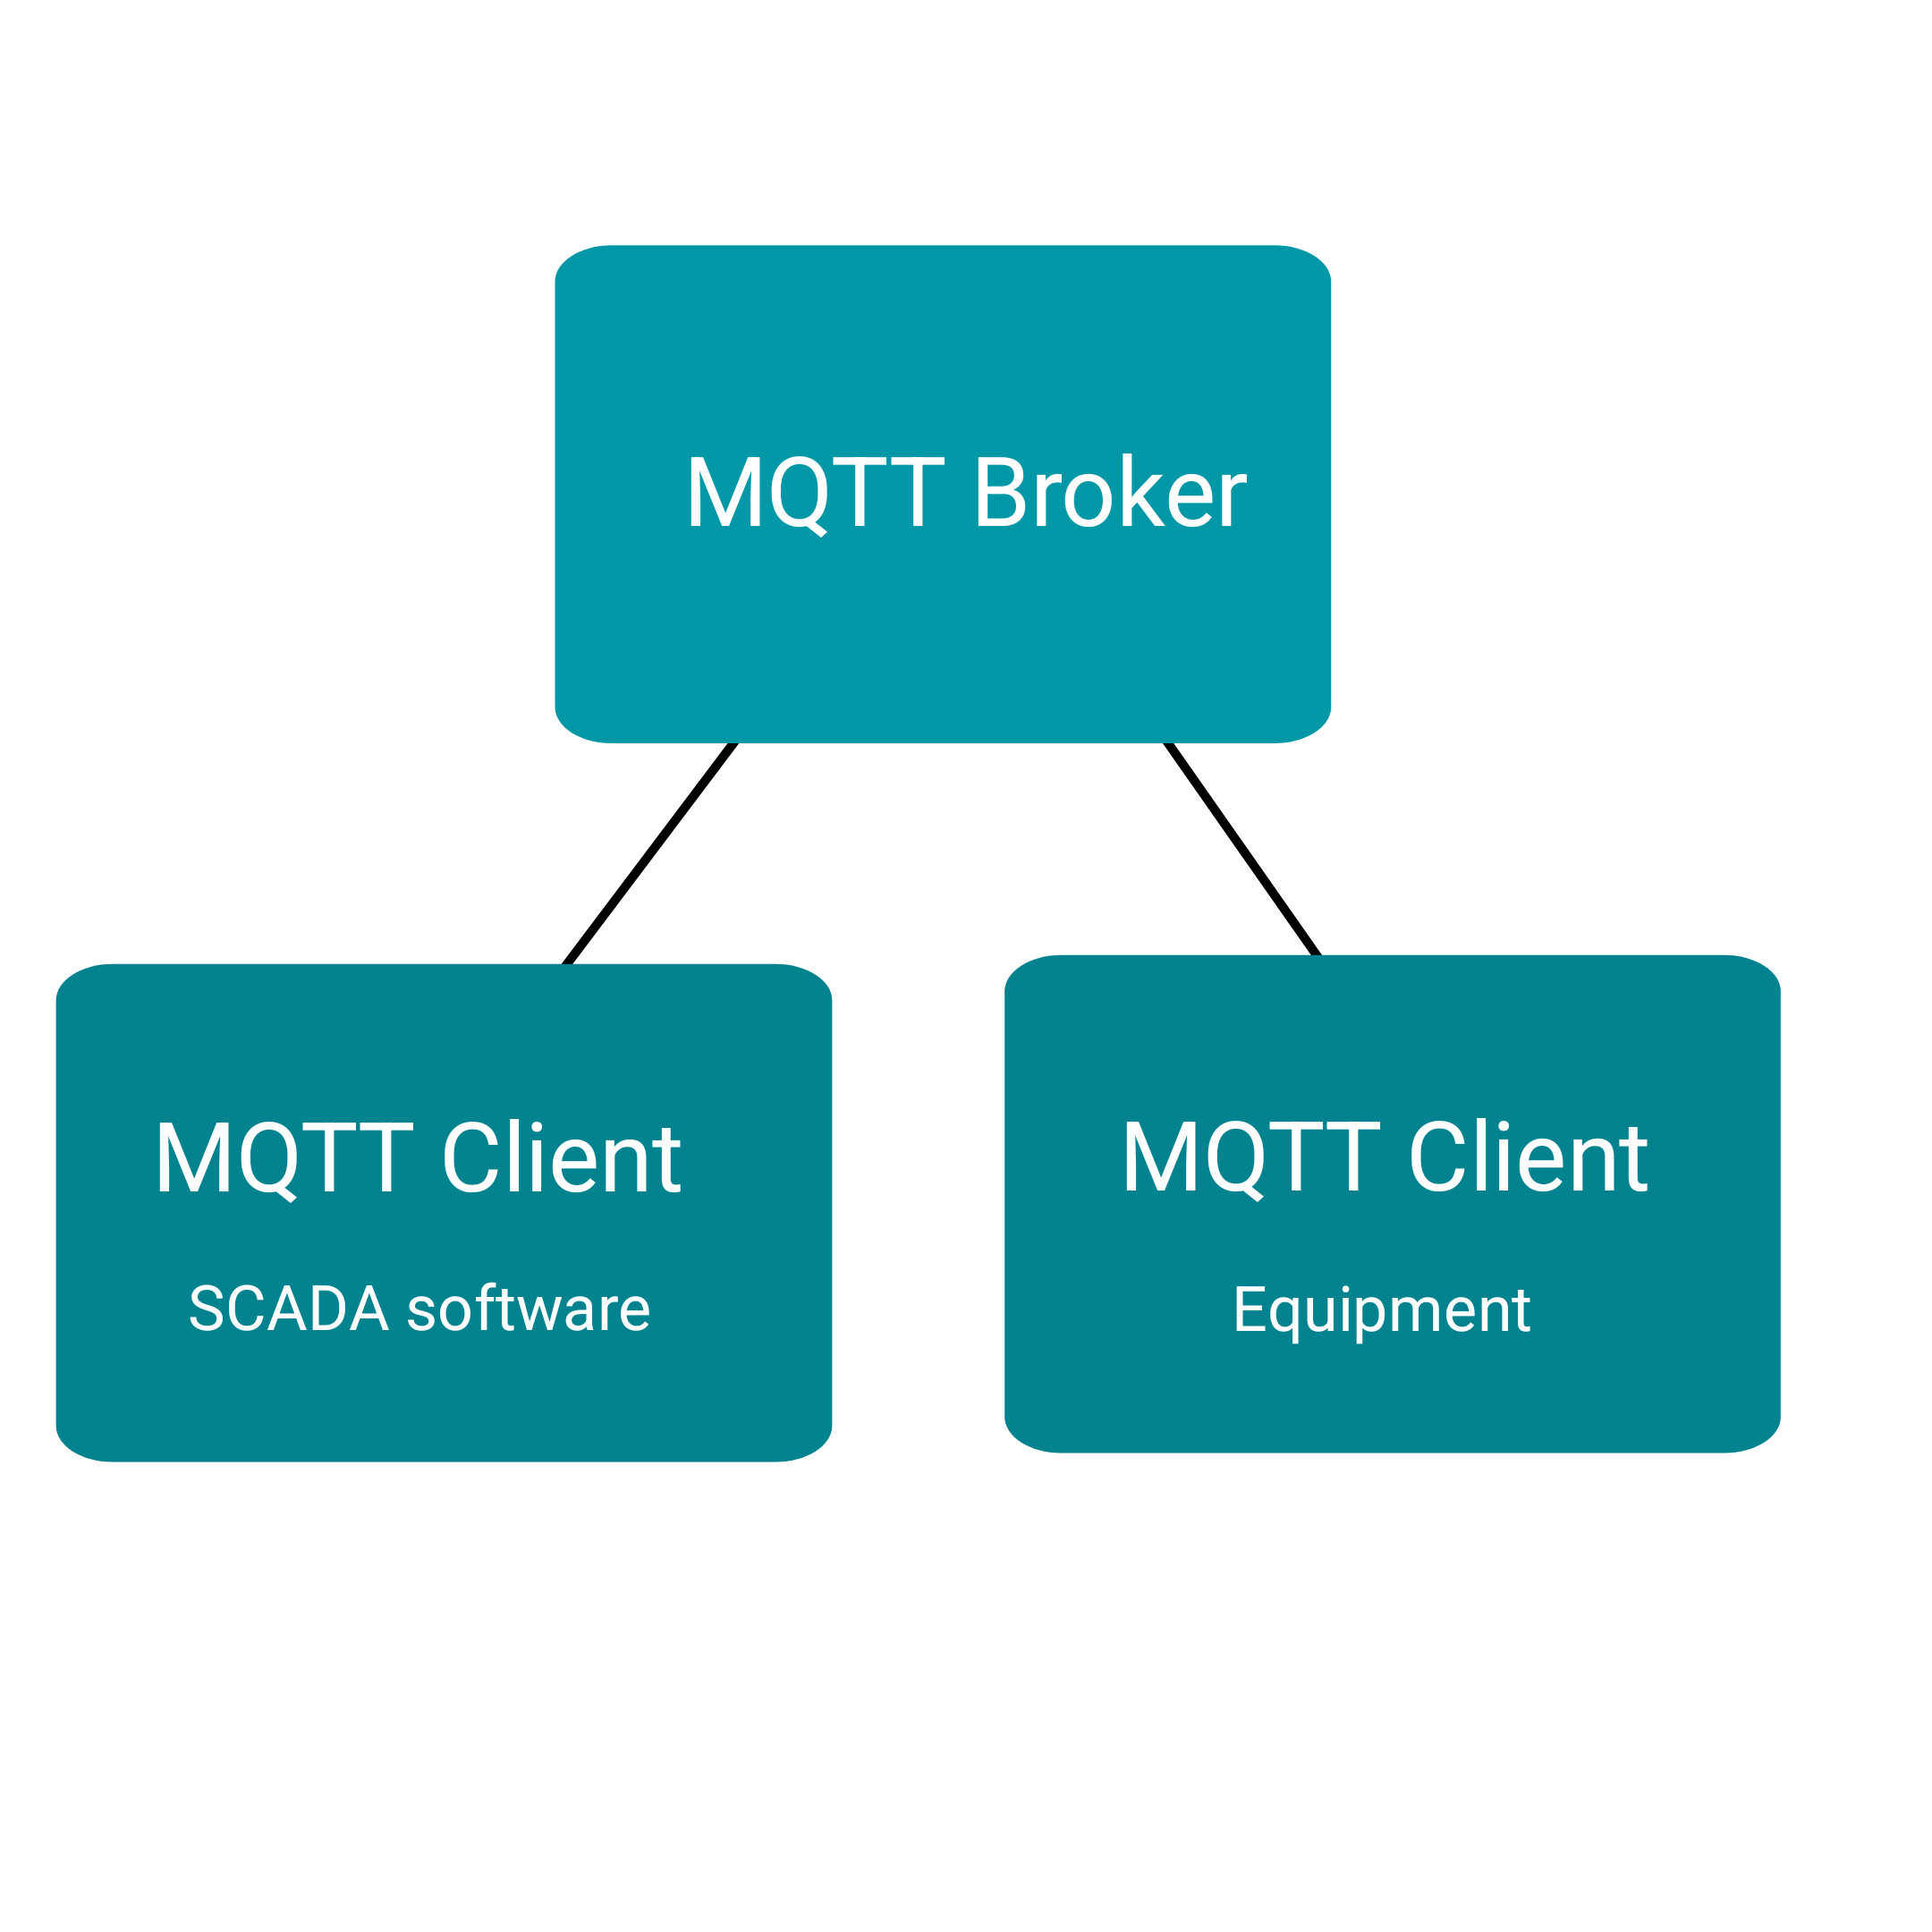 MQTT structure